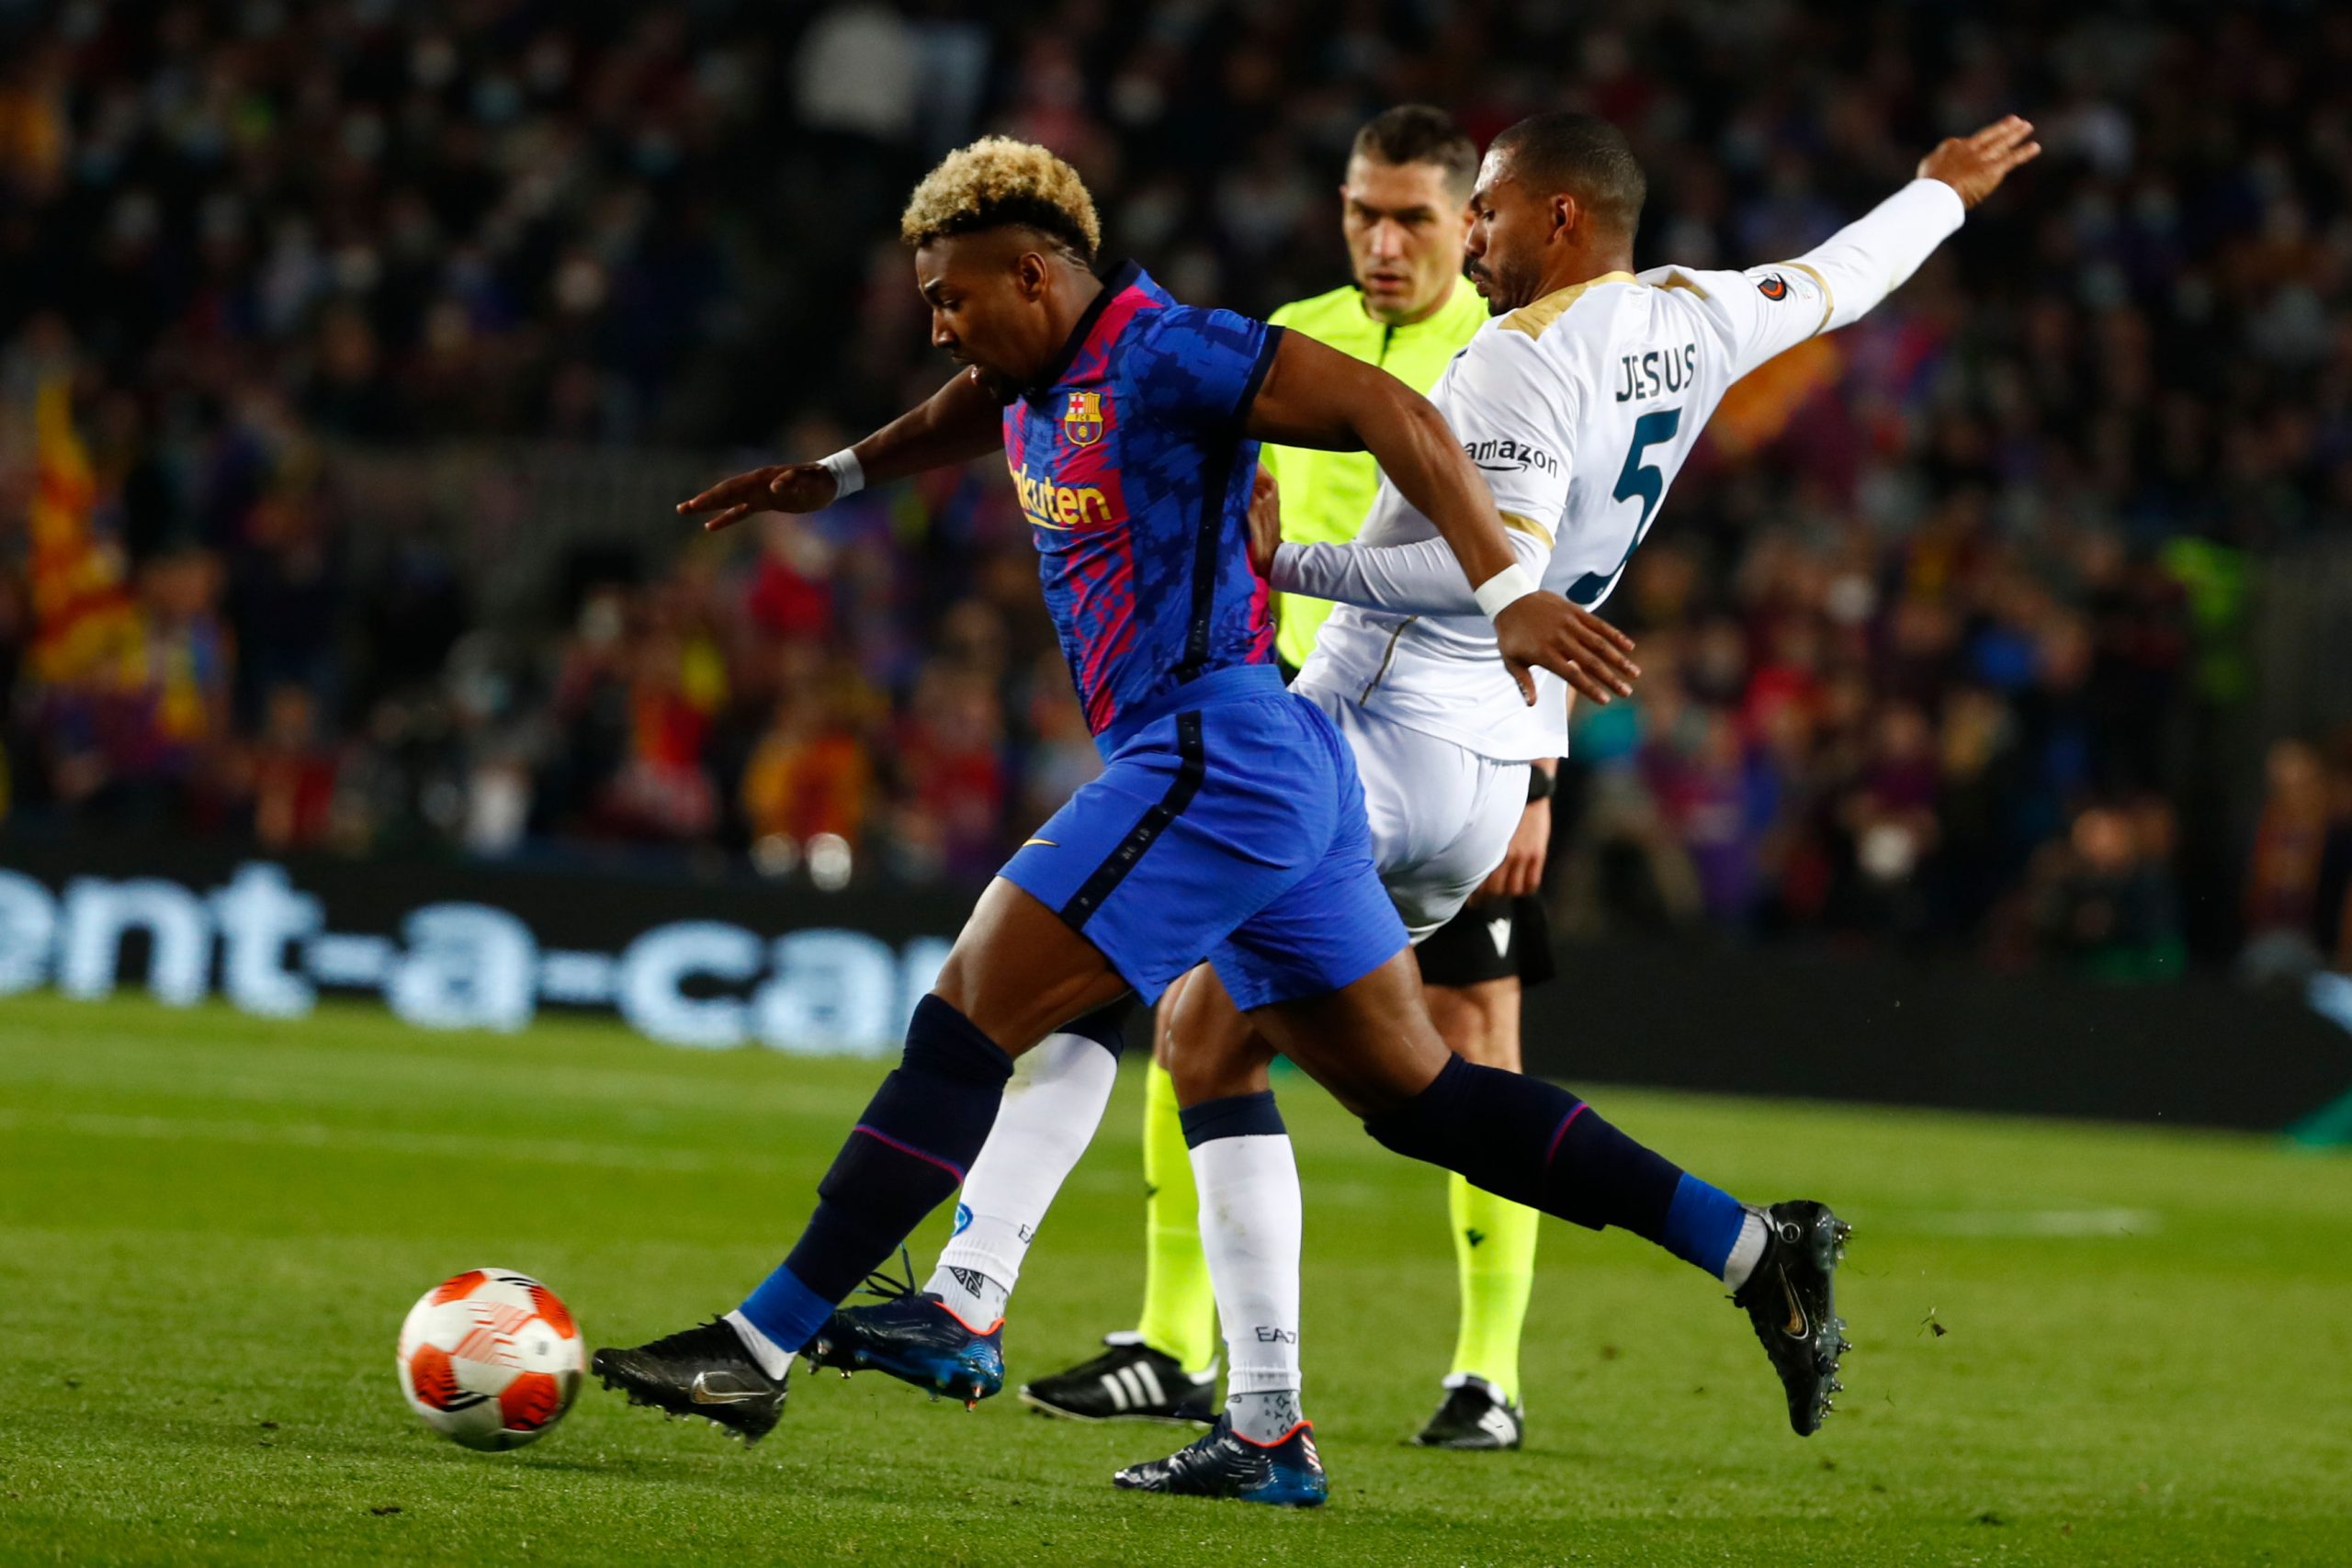 Europa League upsets: Barcelona tie with Napoli, Rangers beat Dortmund